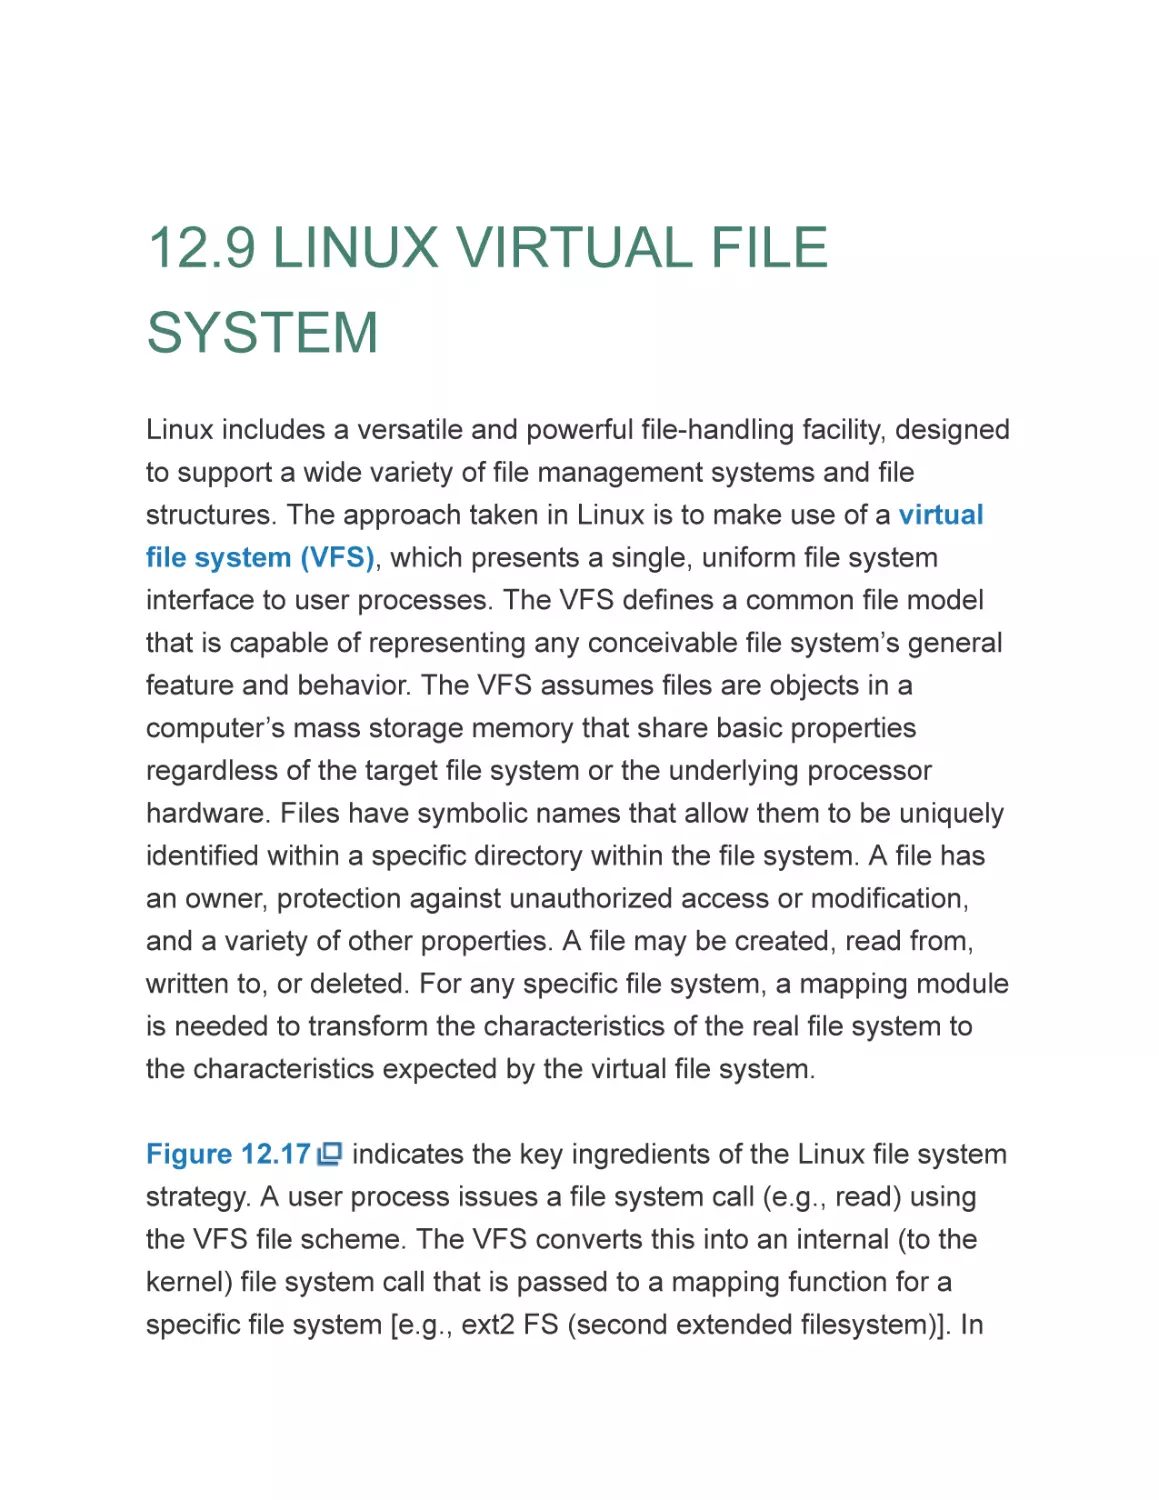 12.9 LINUX VIRTUAL FILE SYSTEM